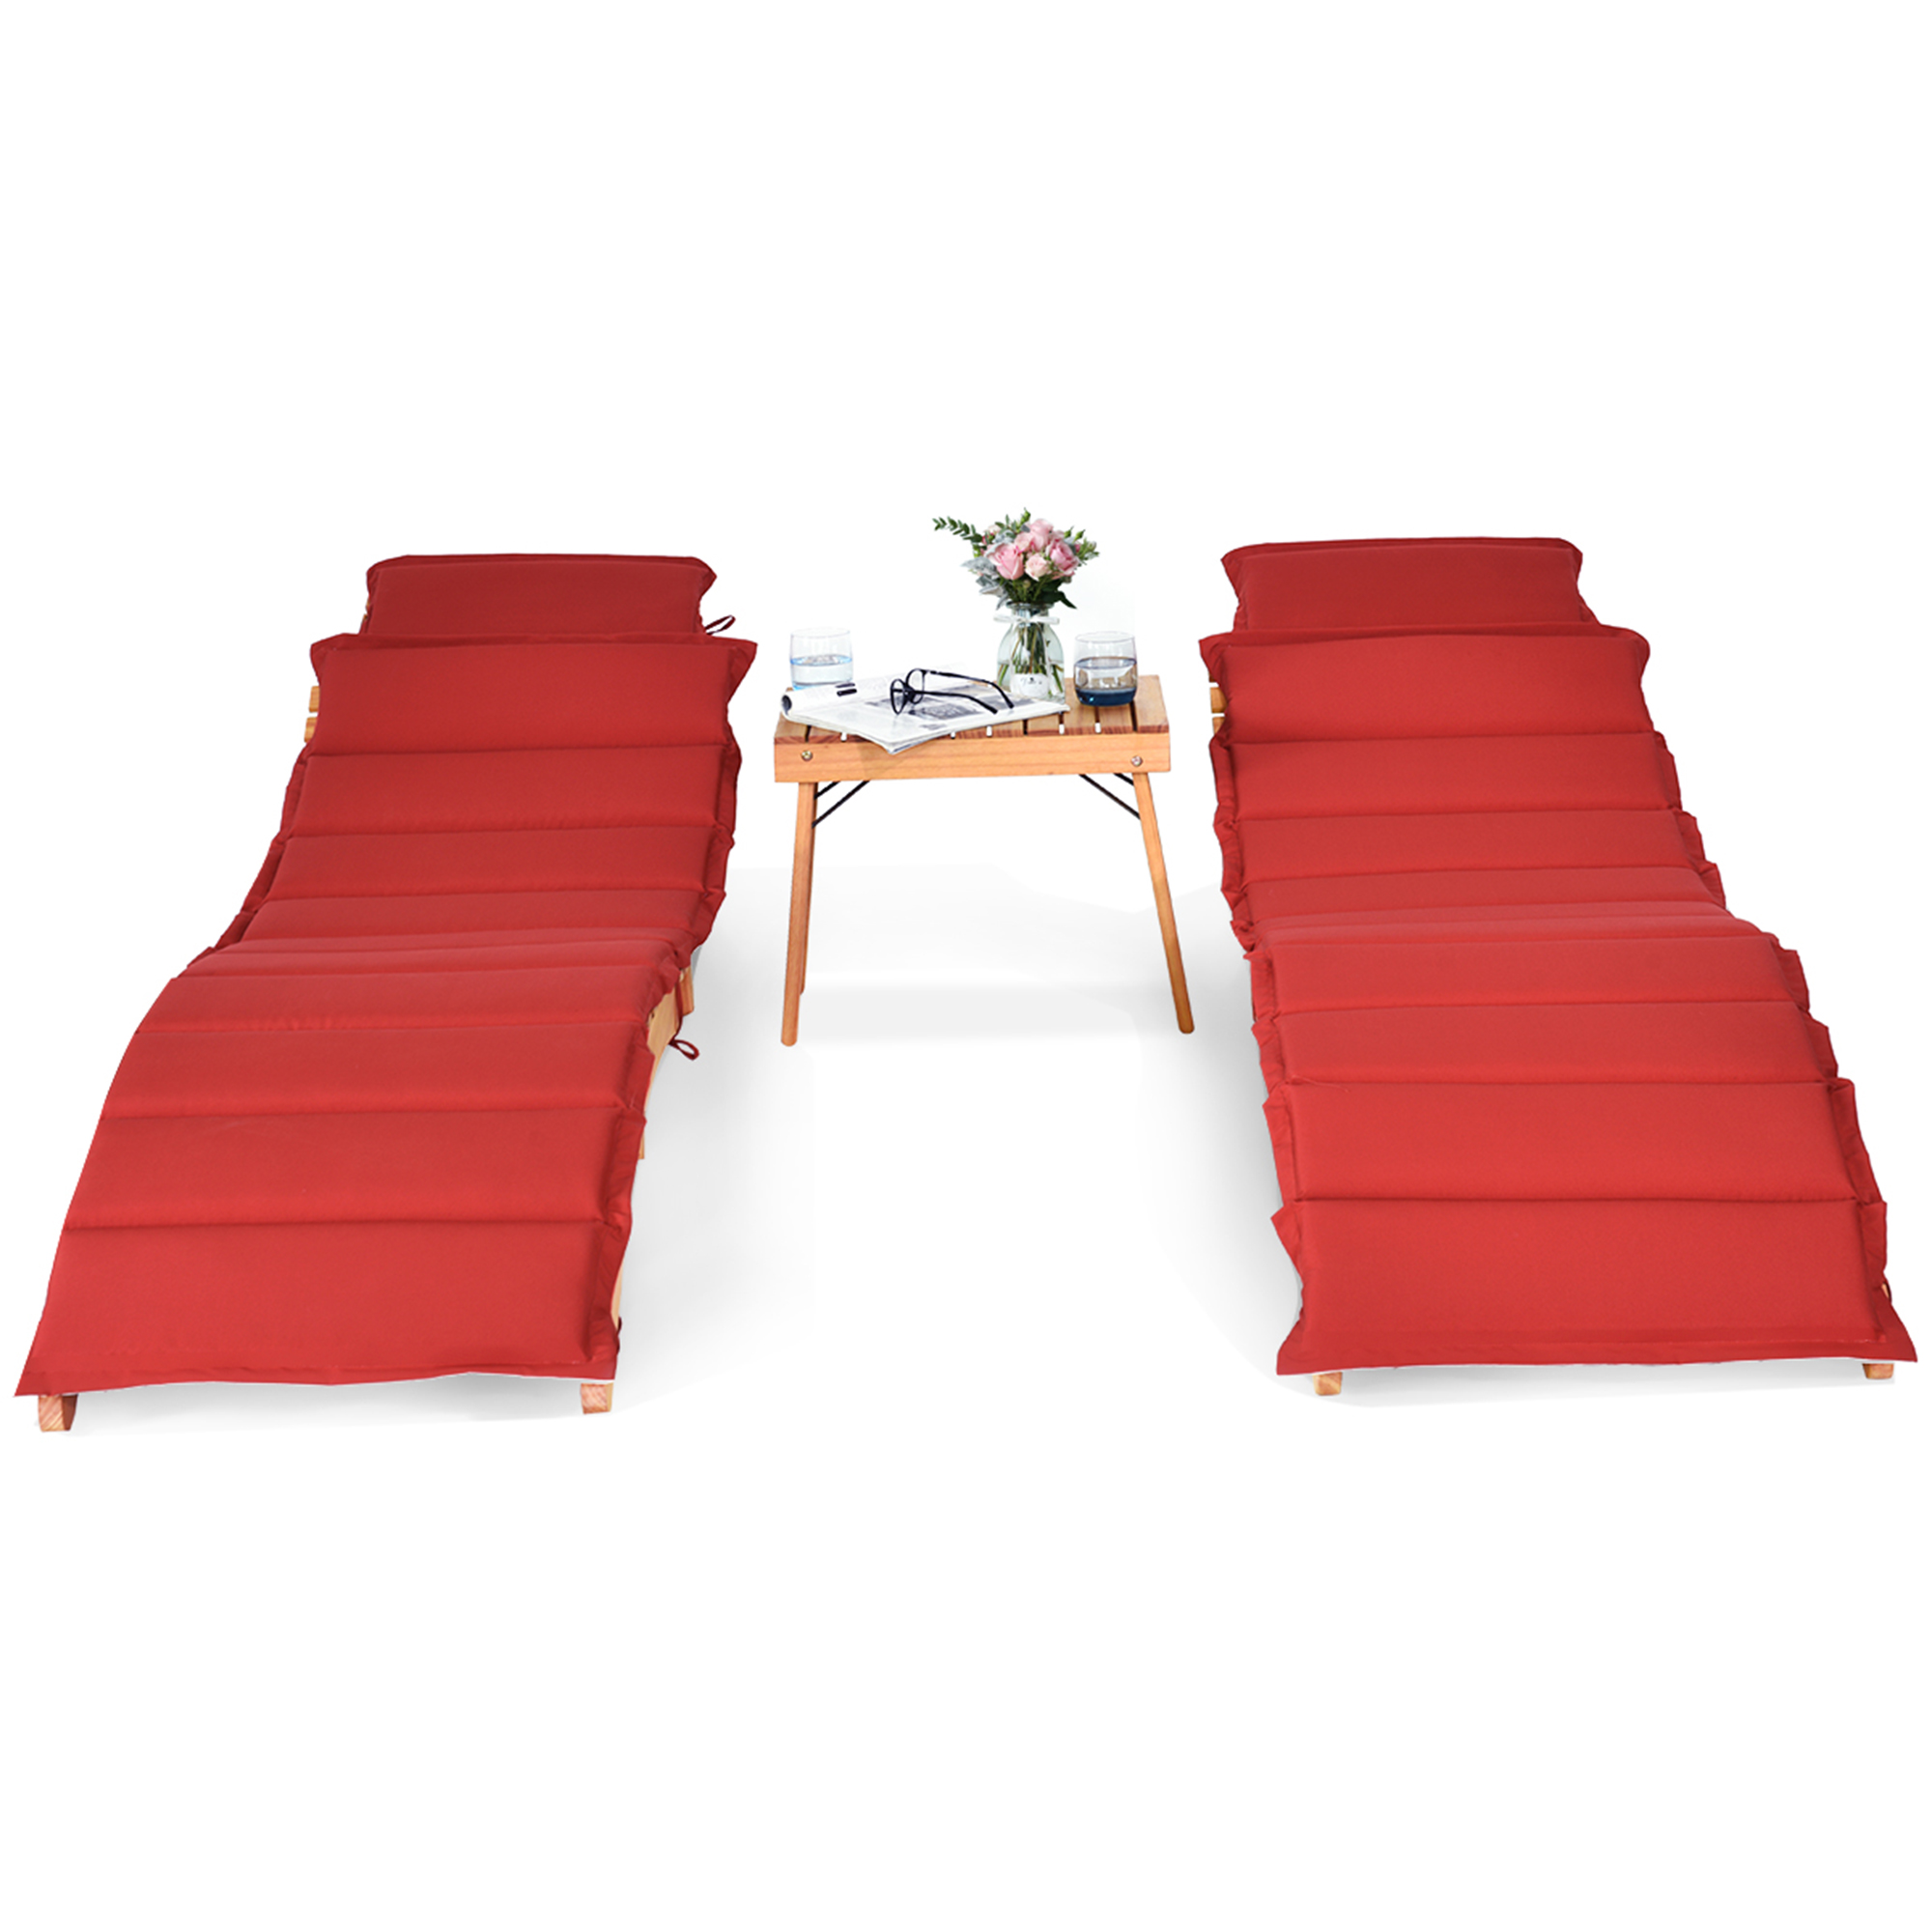 Costway 3PCS Wooden Folding Lounge Chair Set Cushion Pad Pool Deck - image 5 of 10